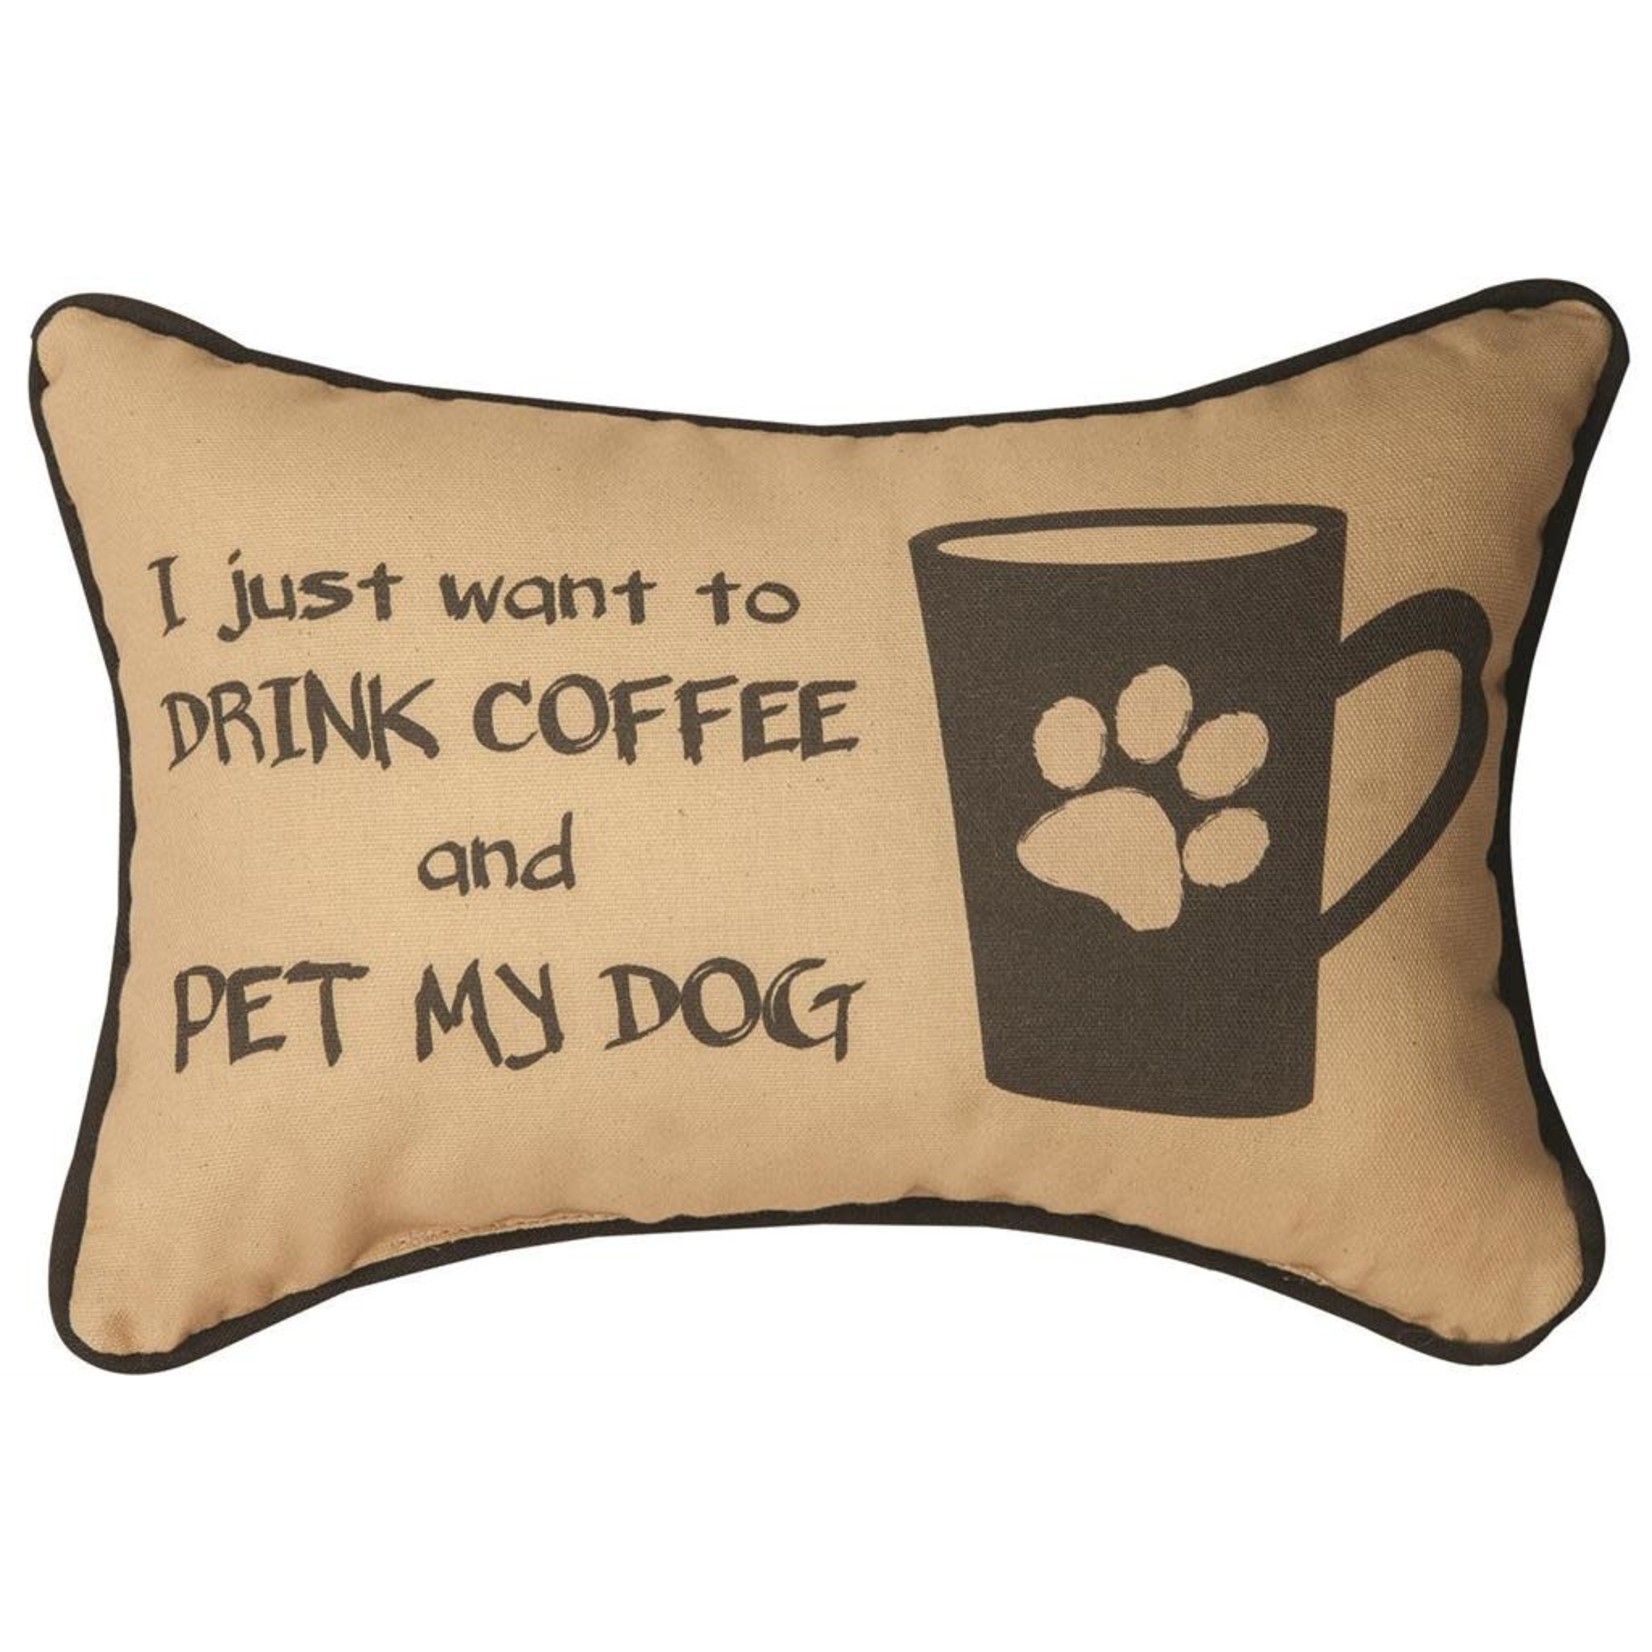 DRINK COFFEE & PET MY DOG PILLOW